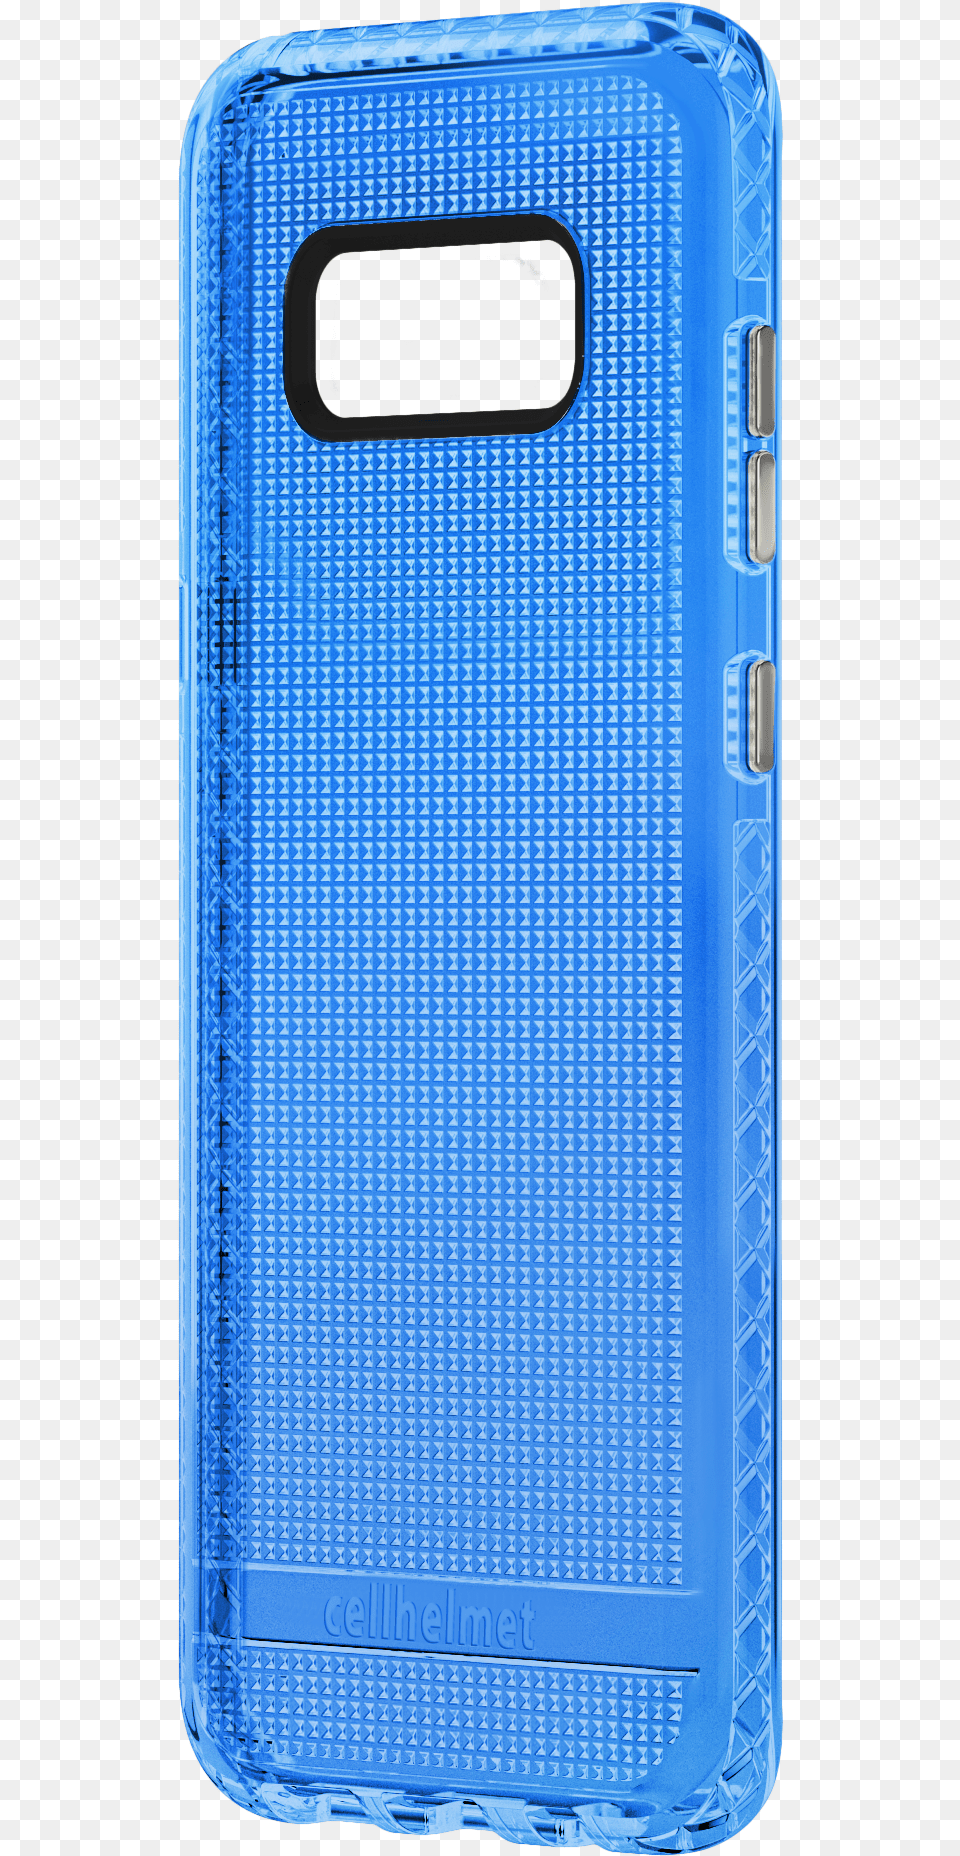 Cellhelmet Altitude X Blue Case For Samsung Galaxy Cellhelmet, Electronics, Mobile Phone, Phone Free Transparent Png